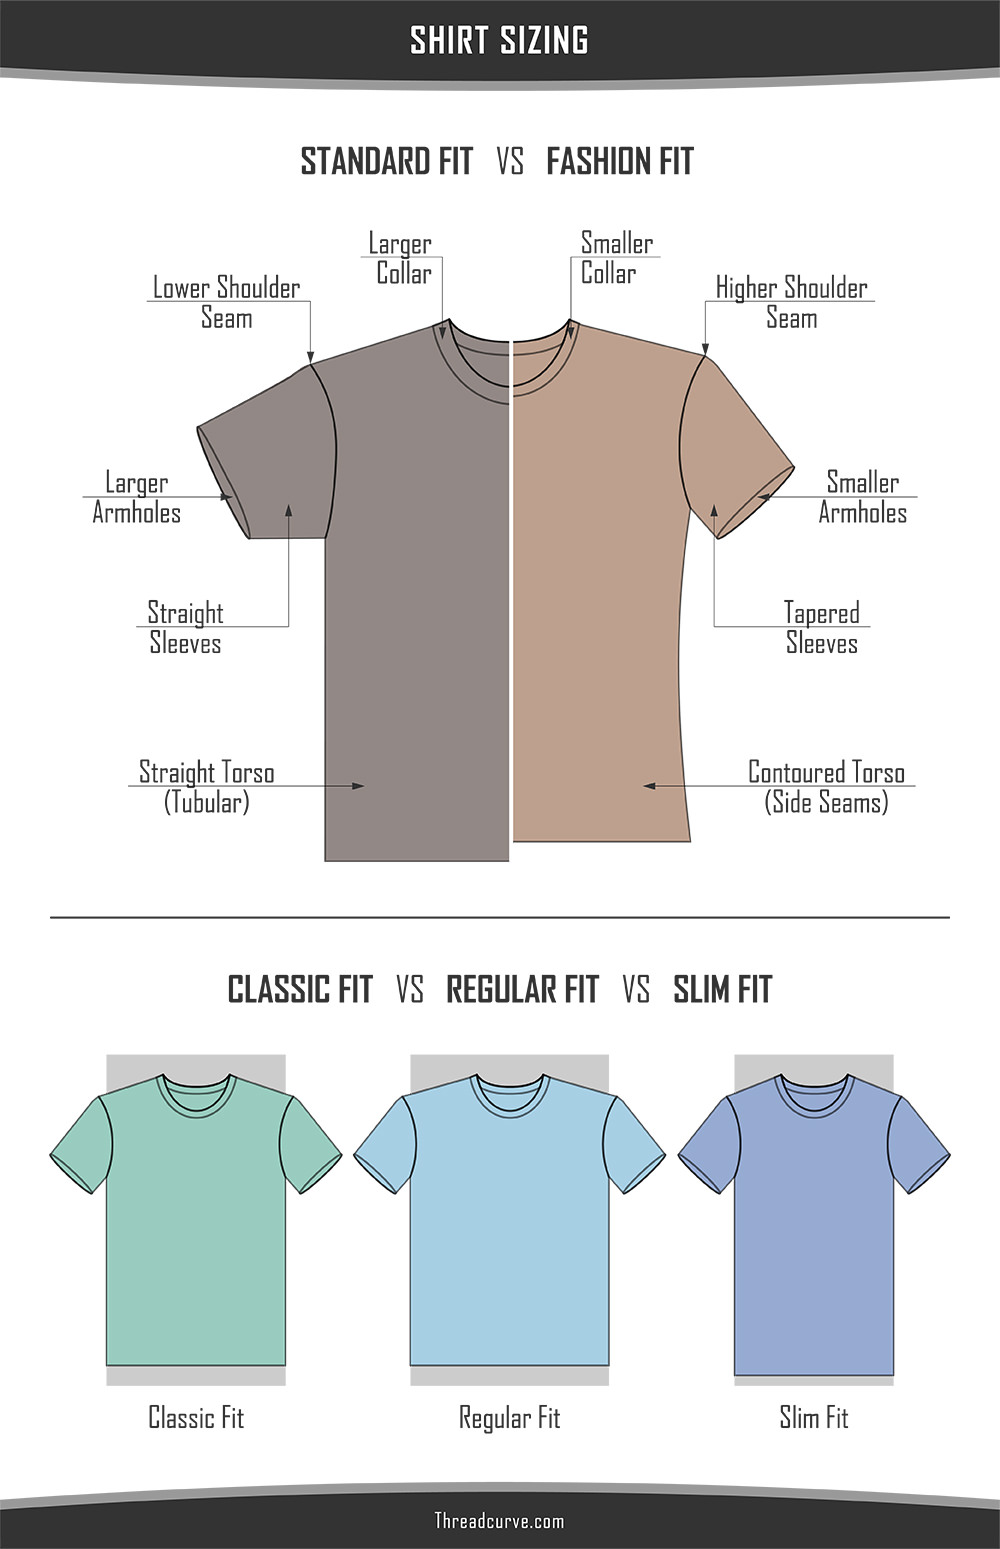 Classic vs regular vs slim fit shirt sizing chart